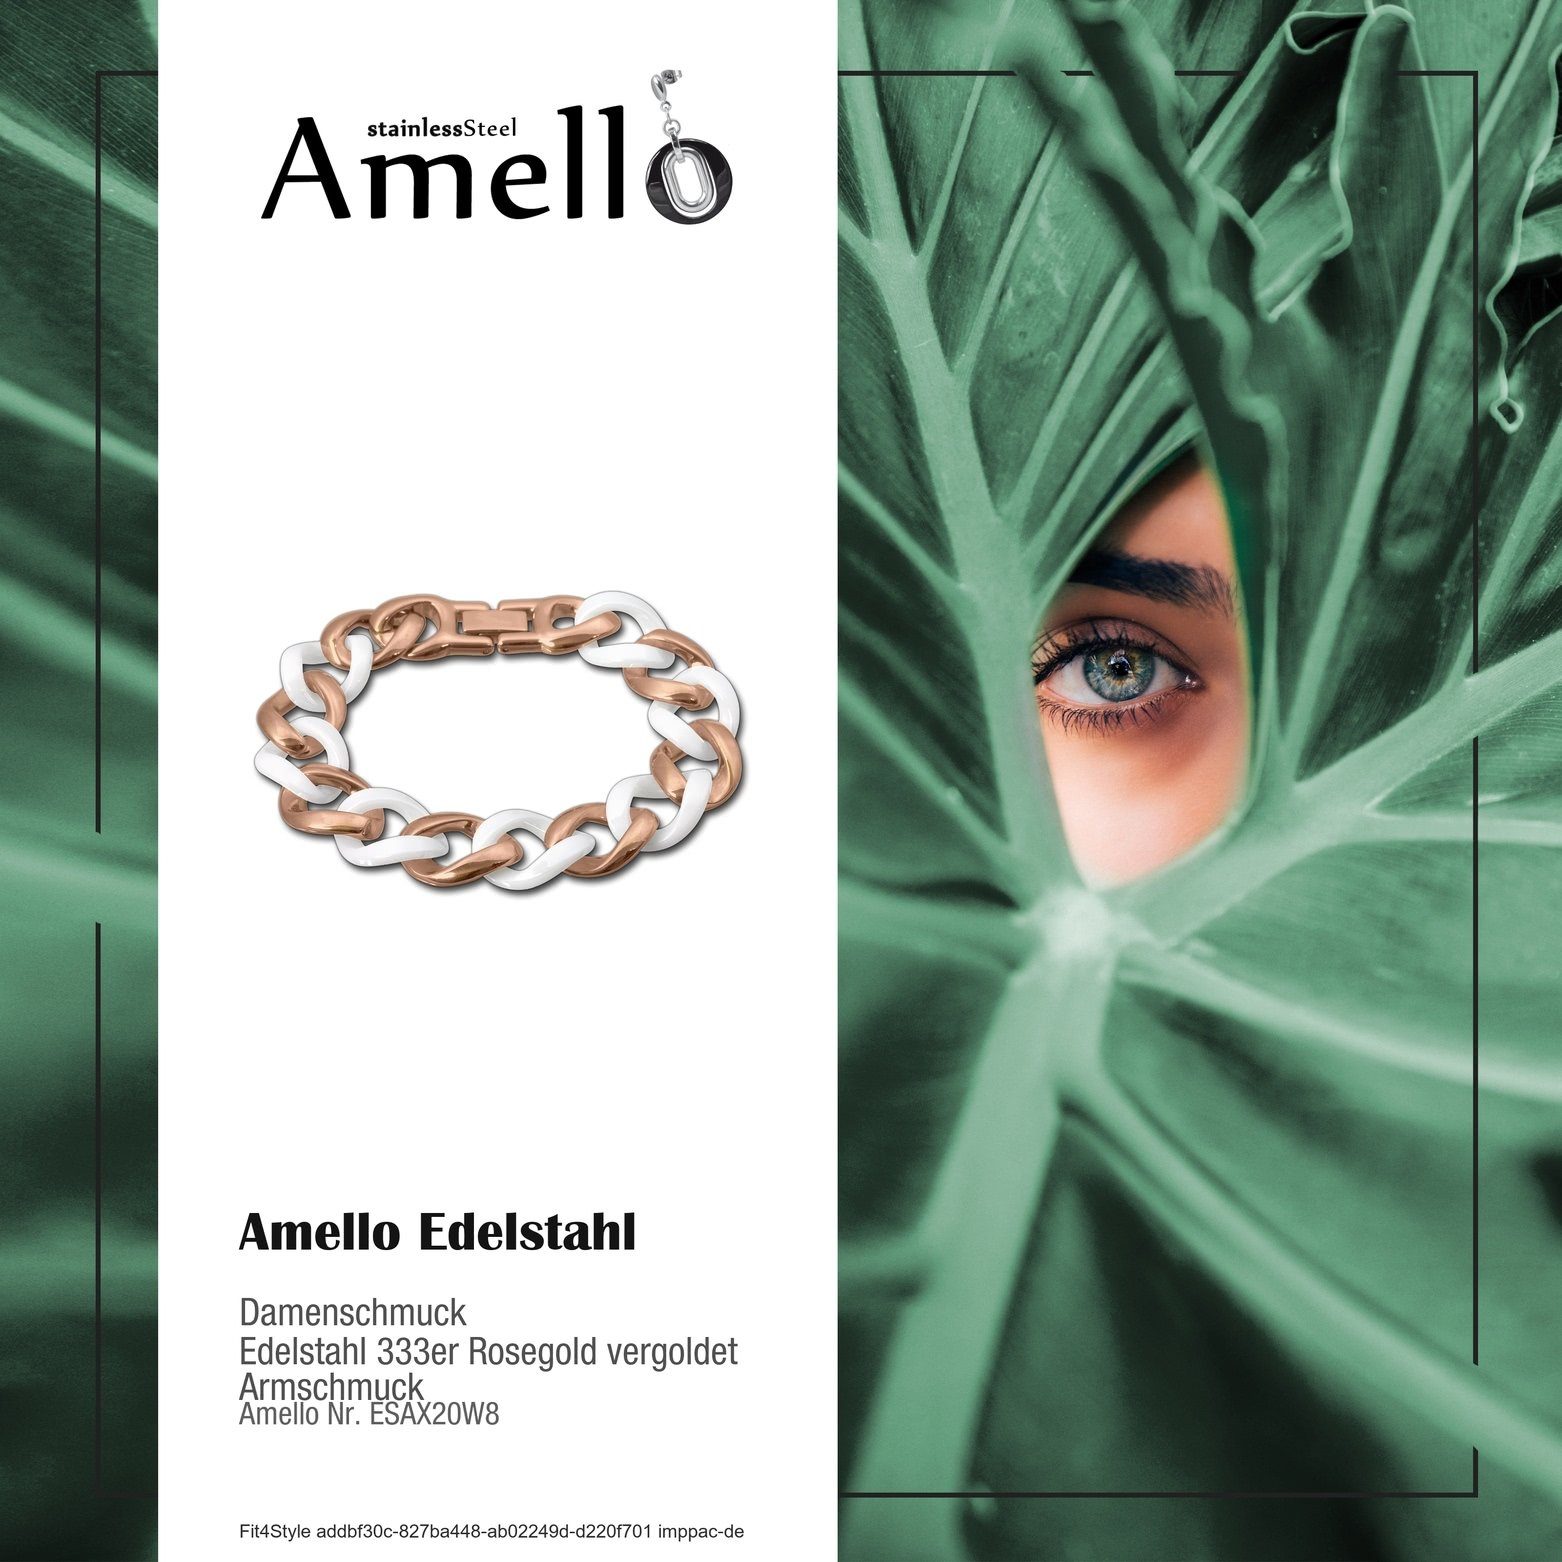 Amello Edelstahlarmband (Stainless (Roségold vergoldet Armbänder (Armband), weiß Amello Panzer für Edelstahl rosegold Damen 3 Armband Steel)